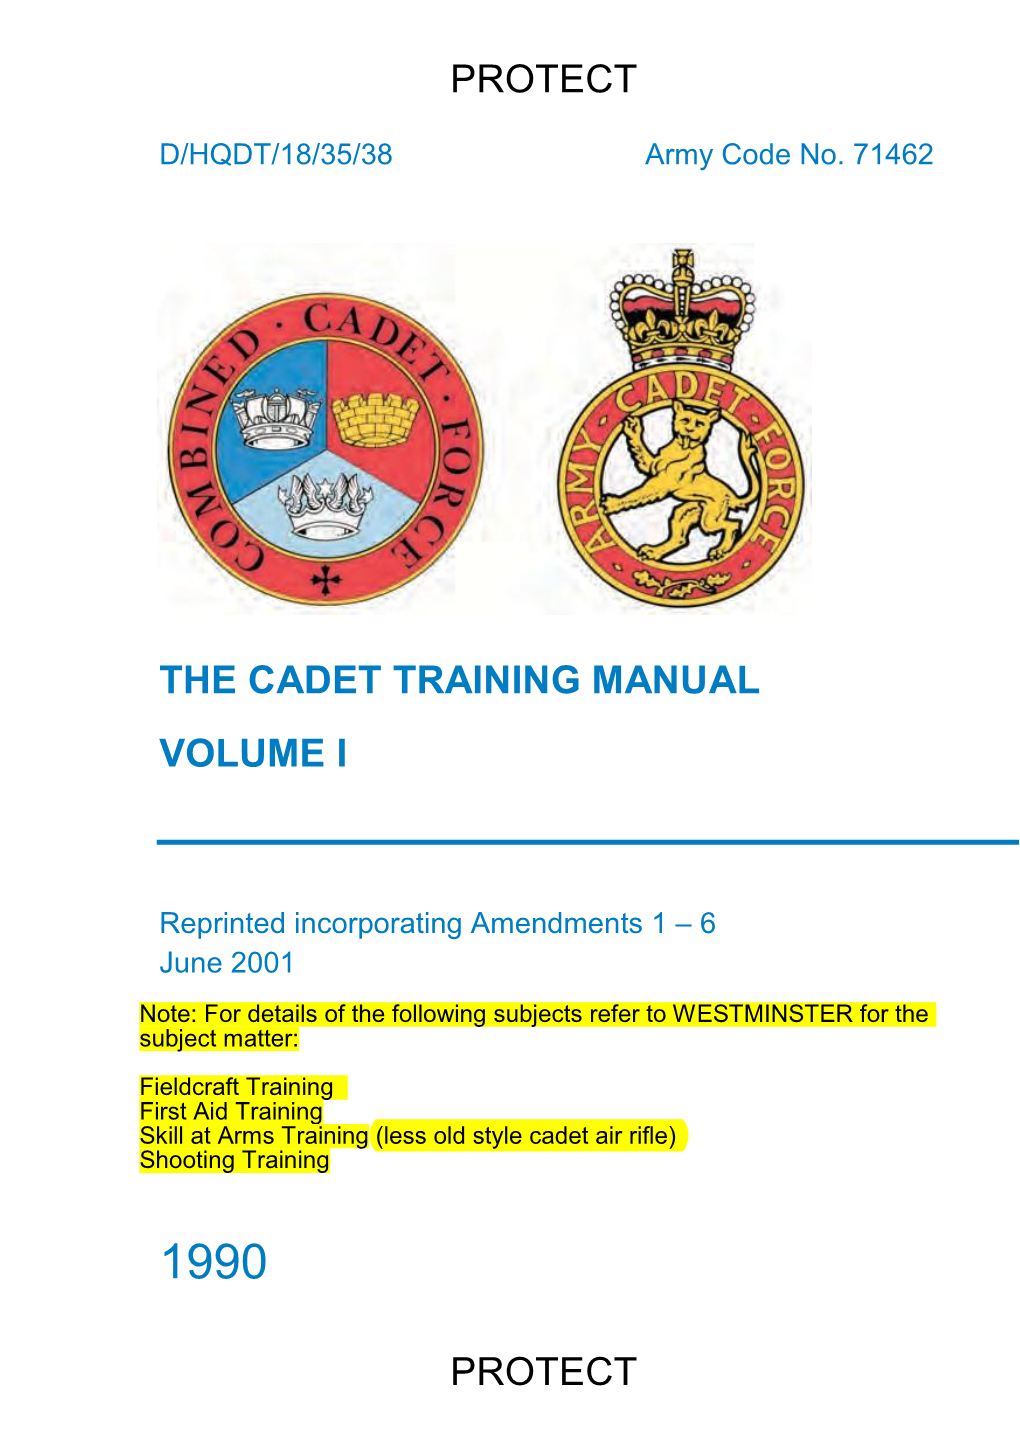 The Cadet Training Manual Volume I